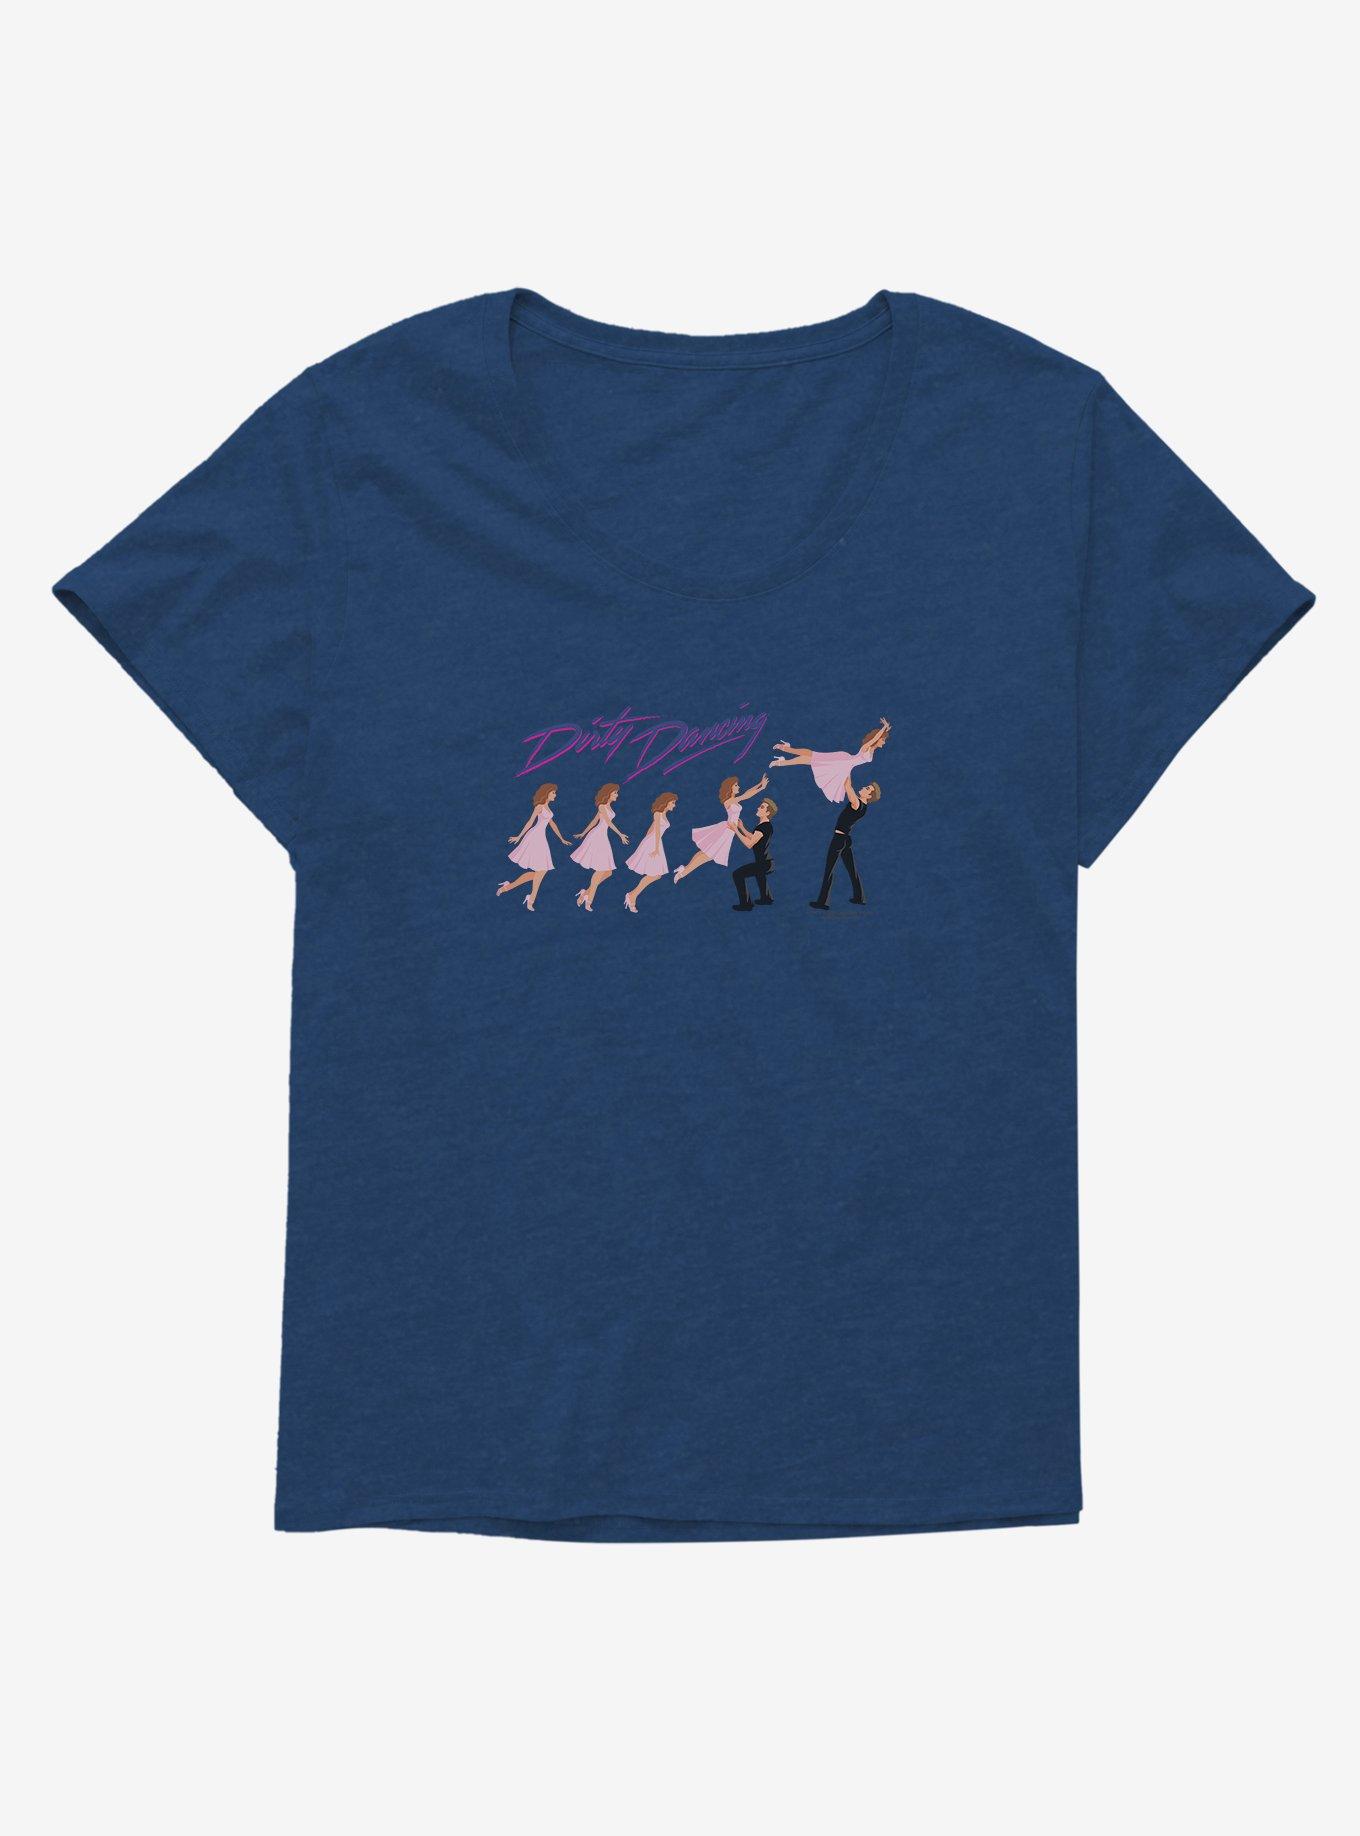 Dirty Dancing Lift Sequence Girls T-Shirt Plus